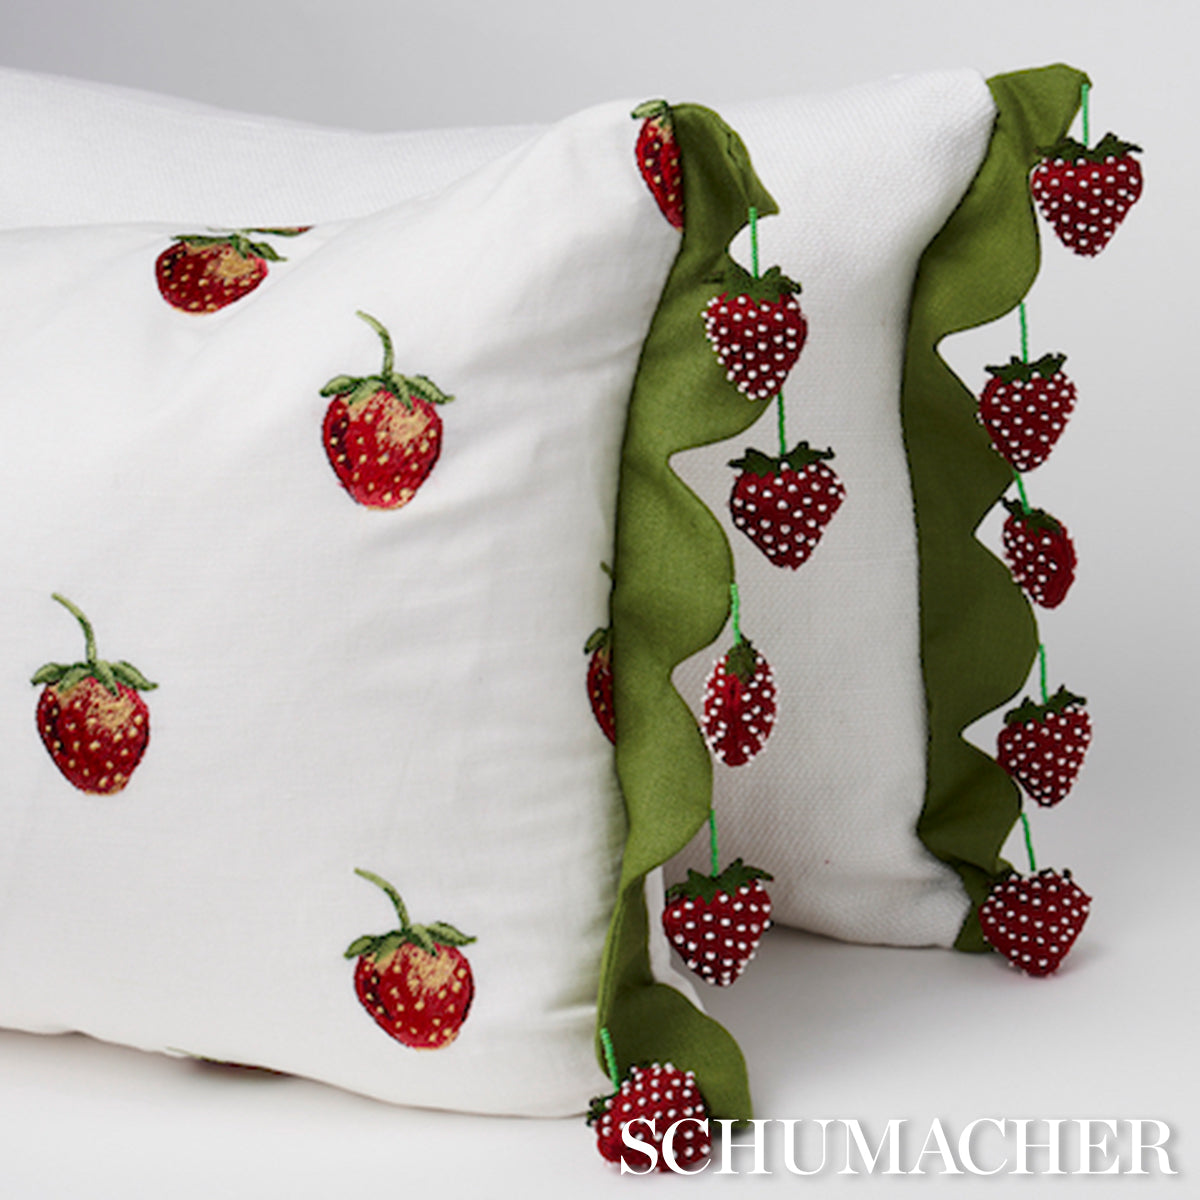 Strawberry Jam Pillow | Green